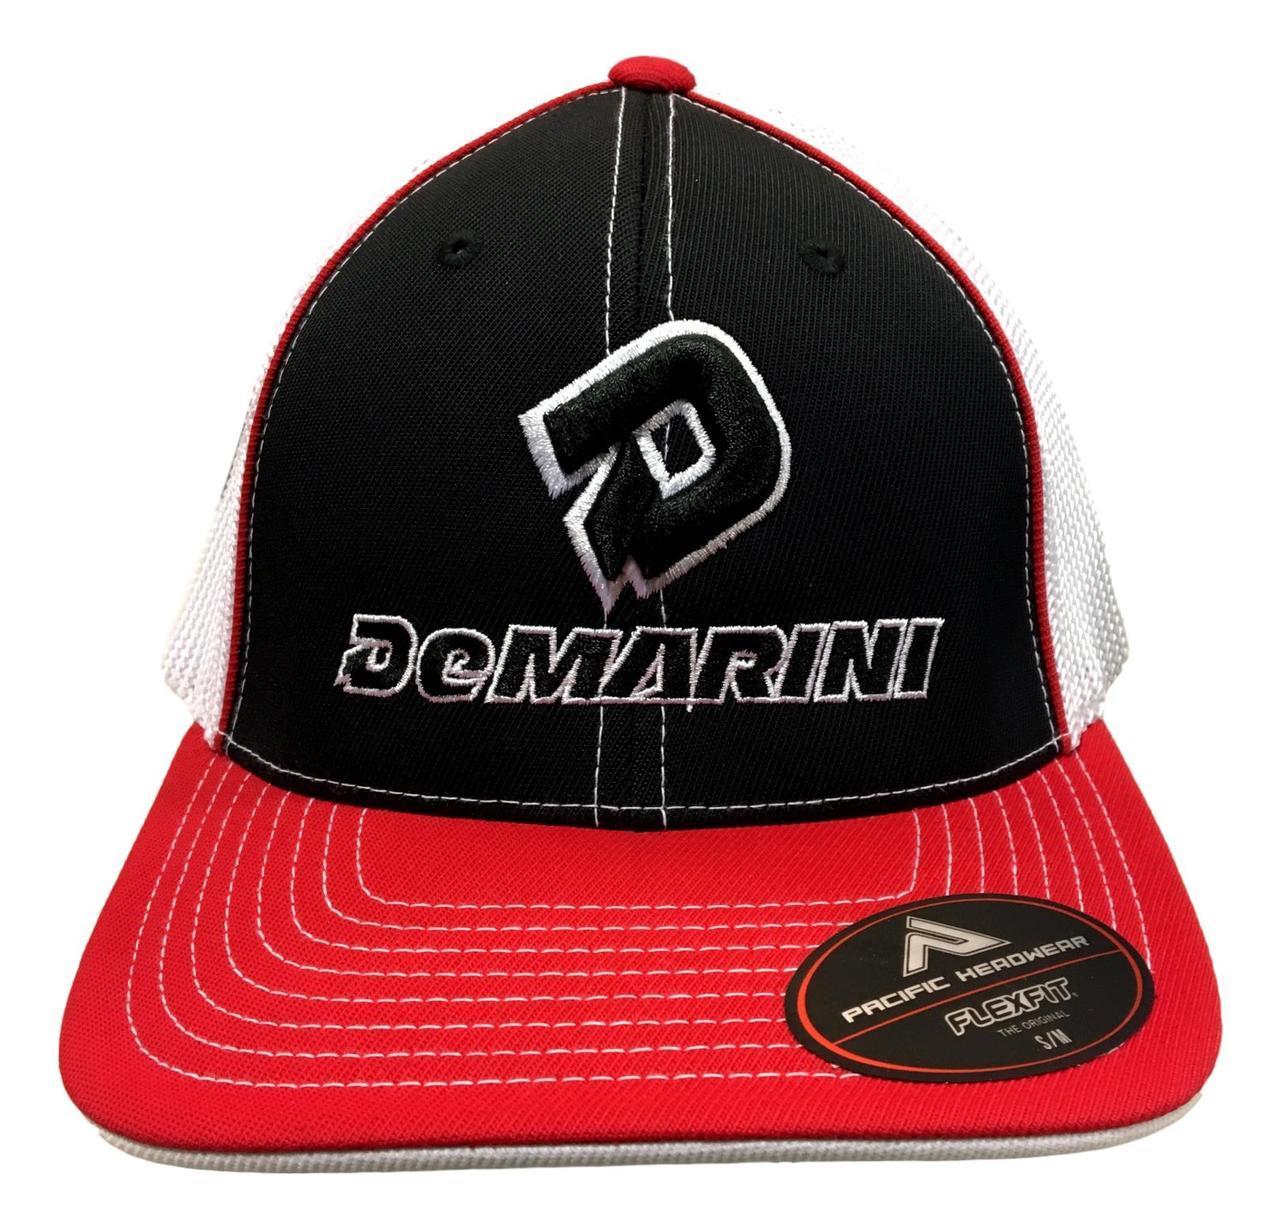 DeMarini Logo - DEMARINI LOGO HAT - DRDWHTBLK-BLKWHT - All American Athletics